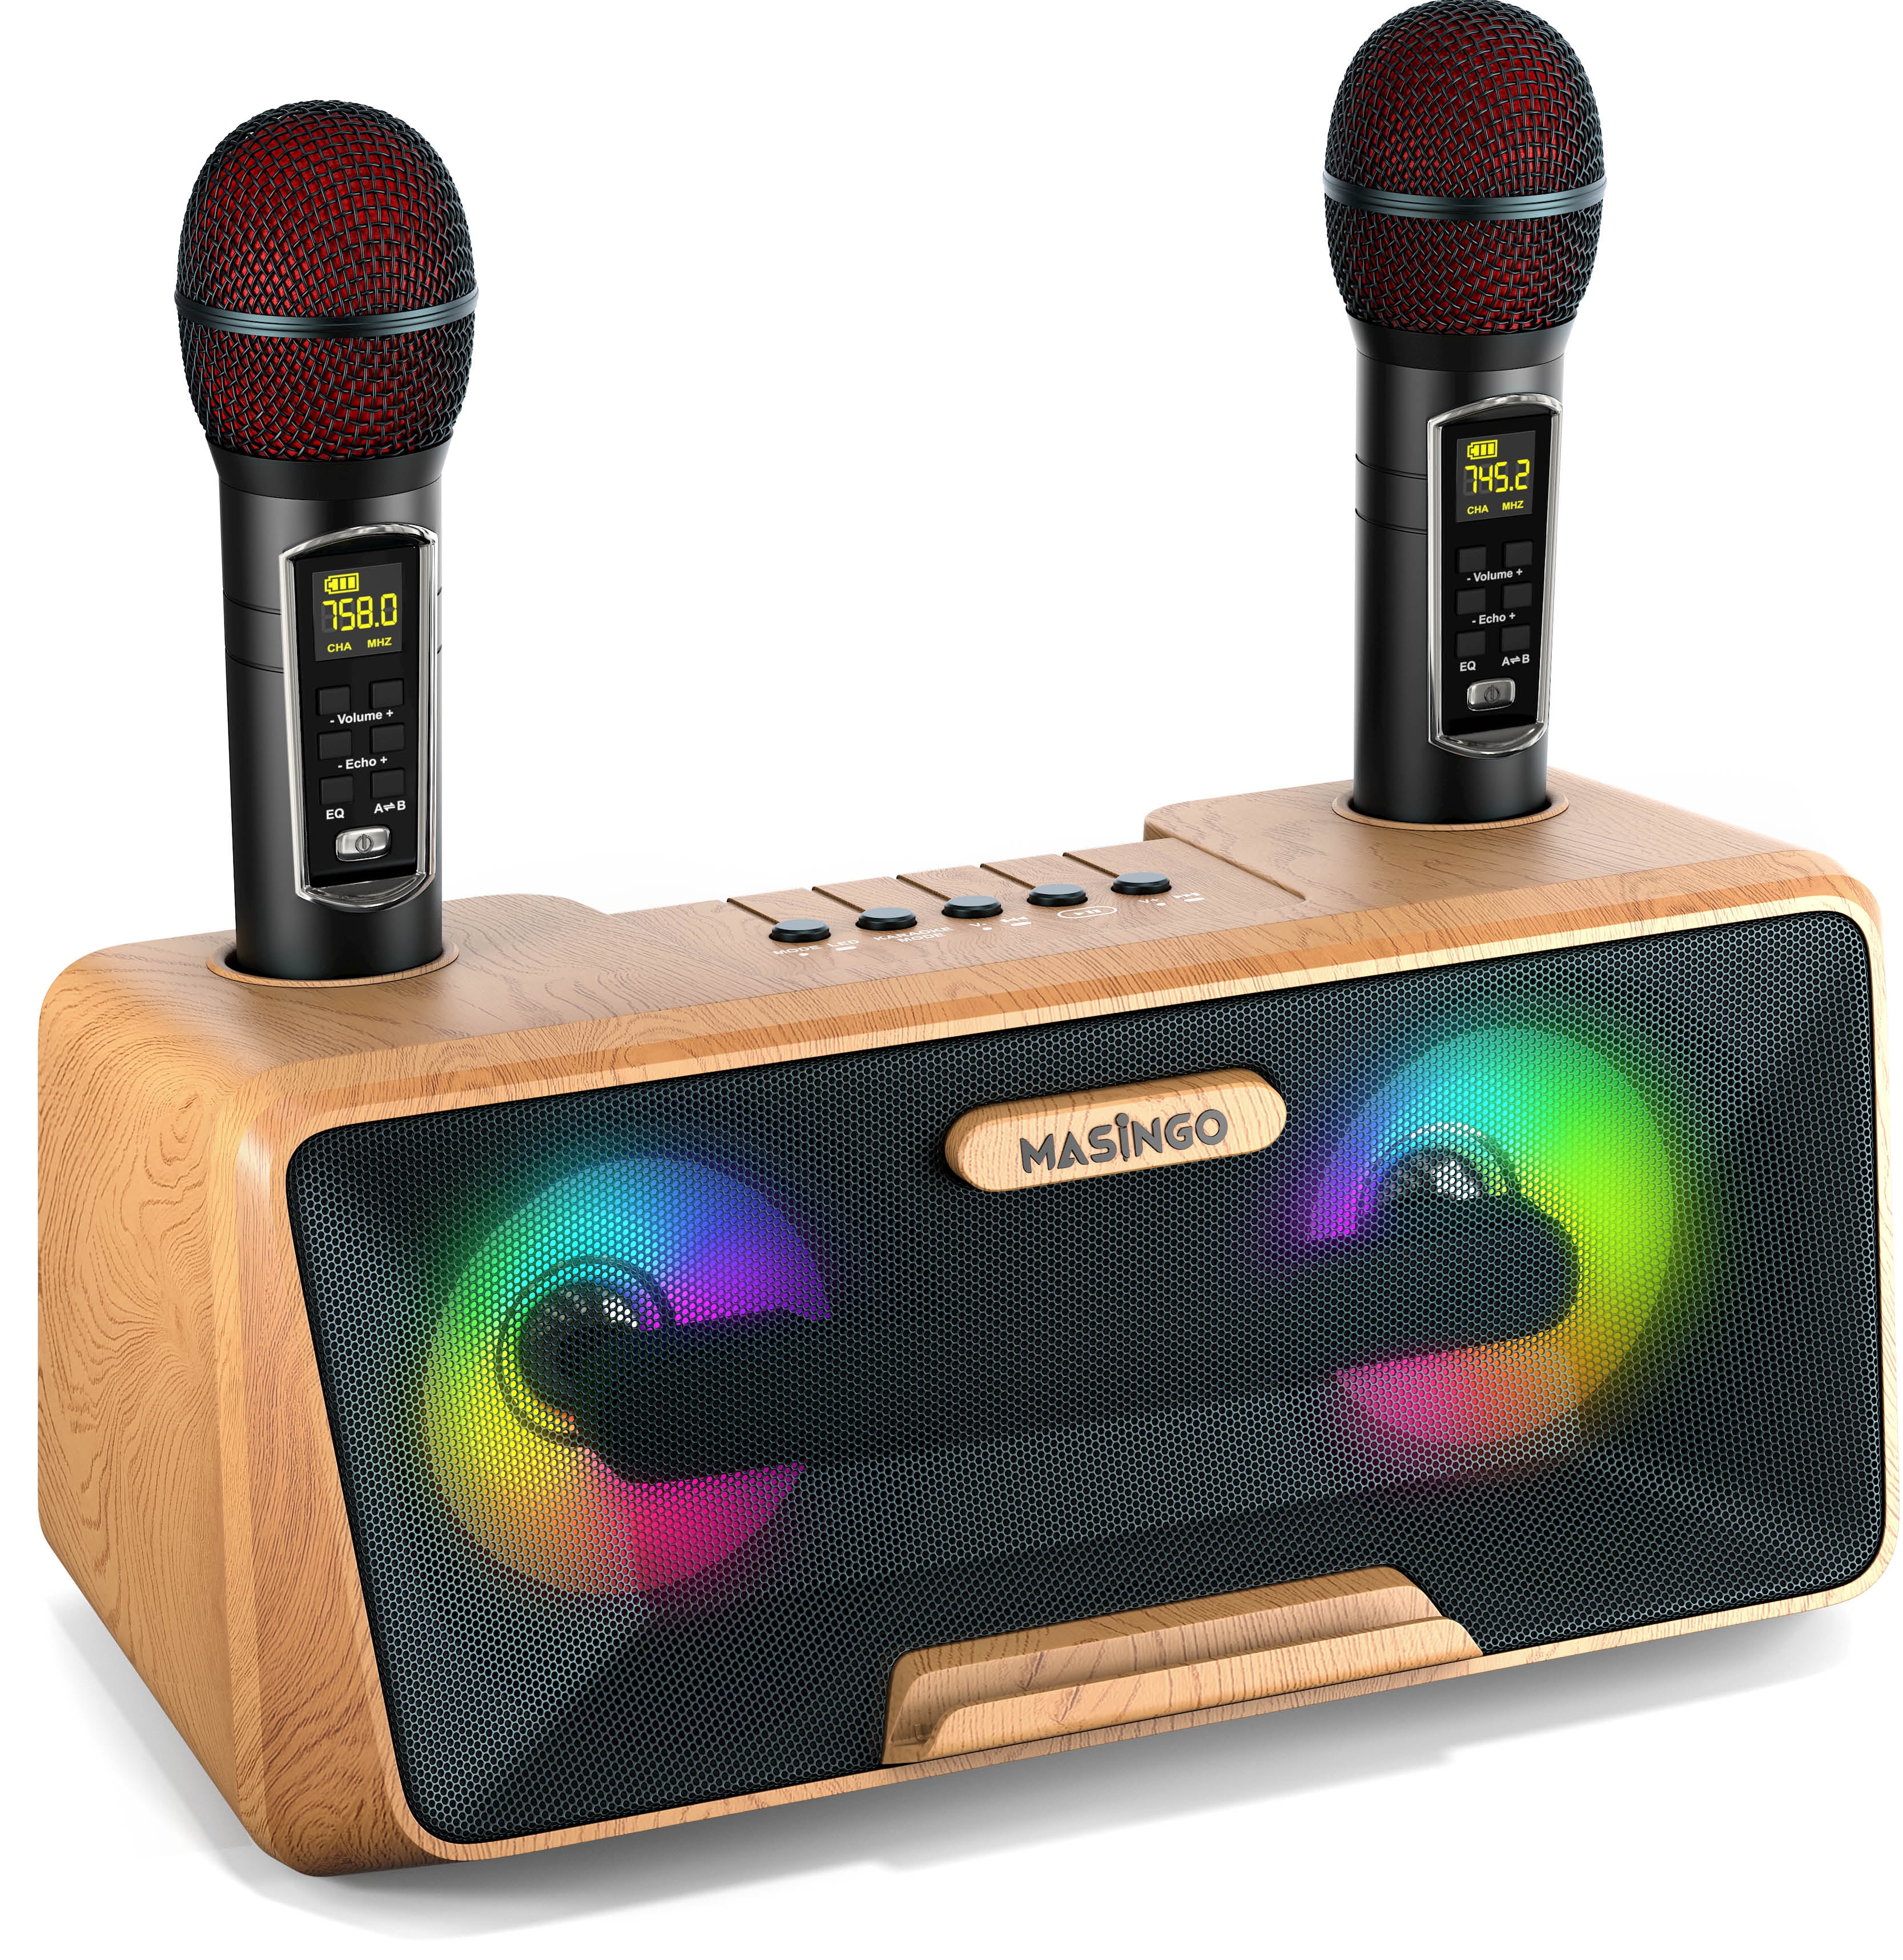 MASINGO Karaoke Machine for Adults and Kids with 2 Wireless Microphones